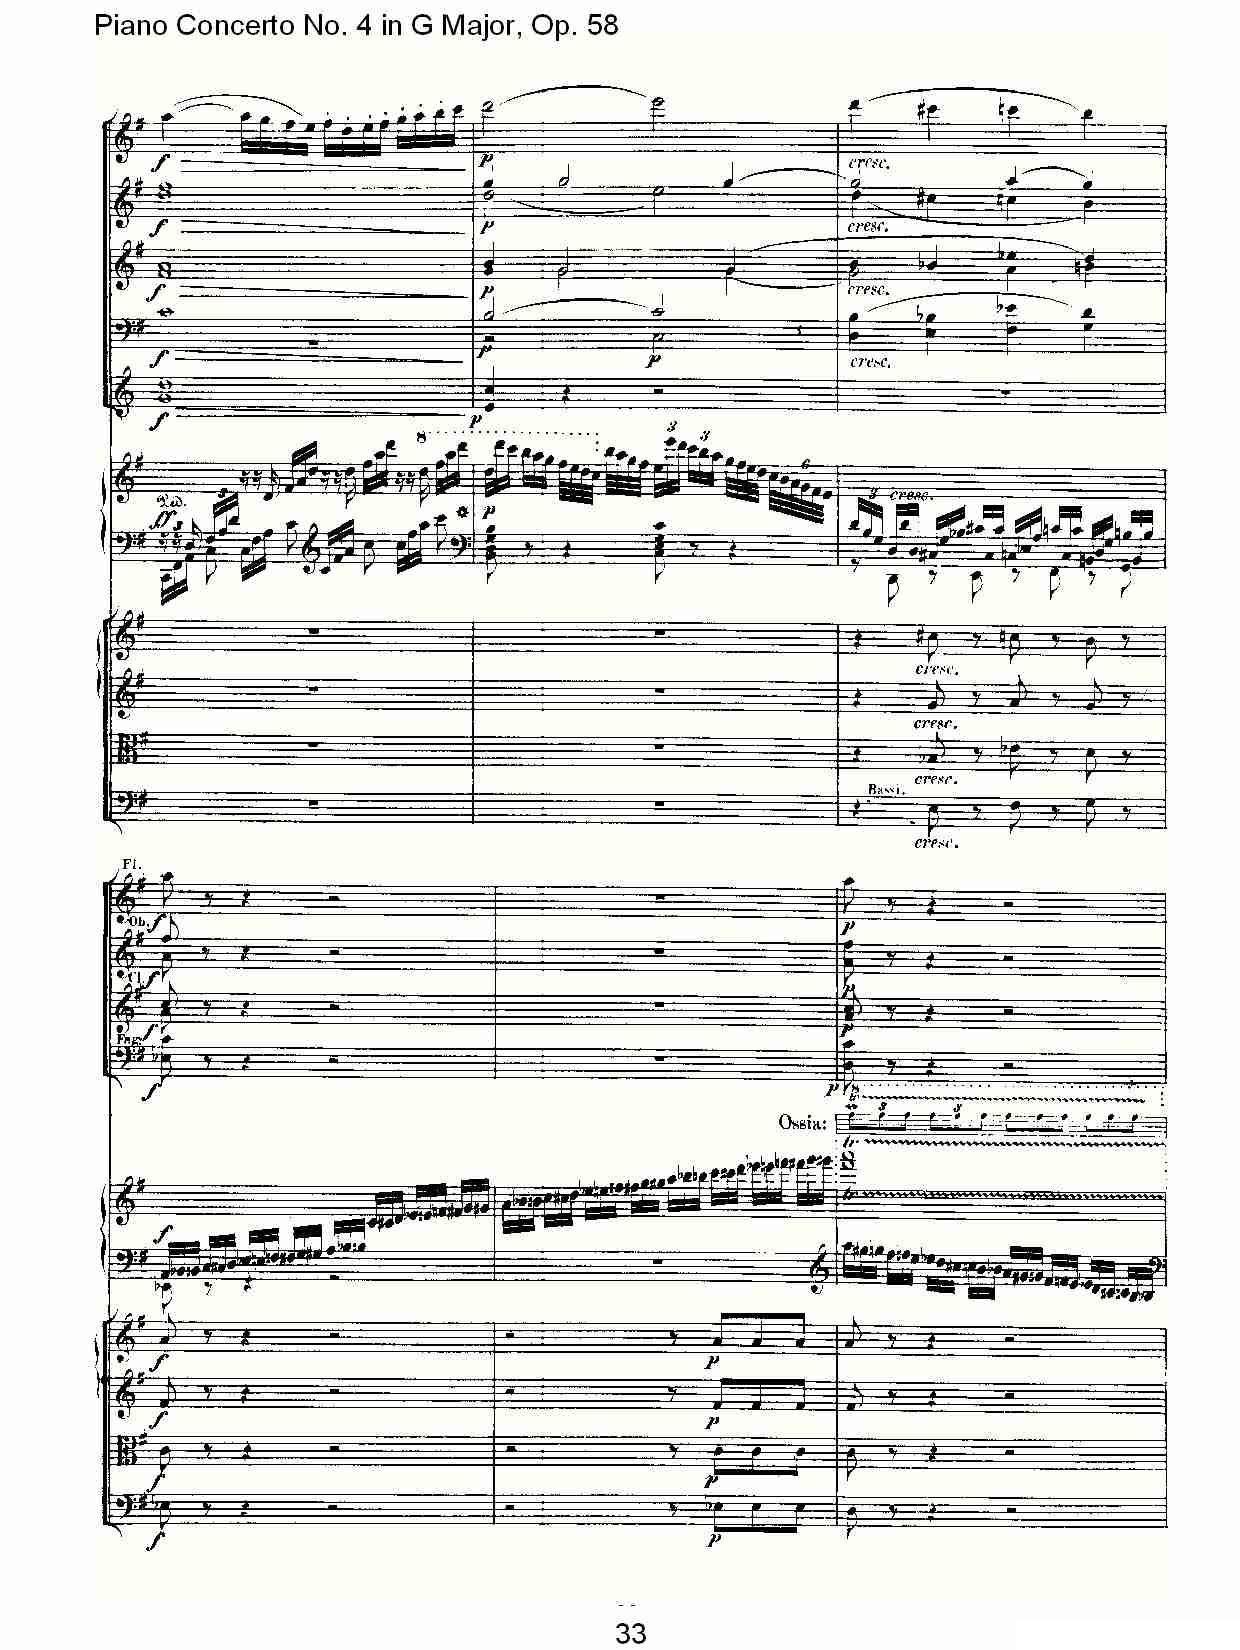 Ｇ大调钢琴第四协奏曲 Op.58 第一乐章钢琴曲谱（图33）